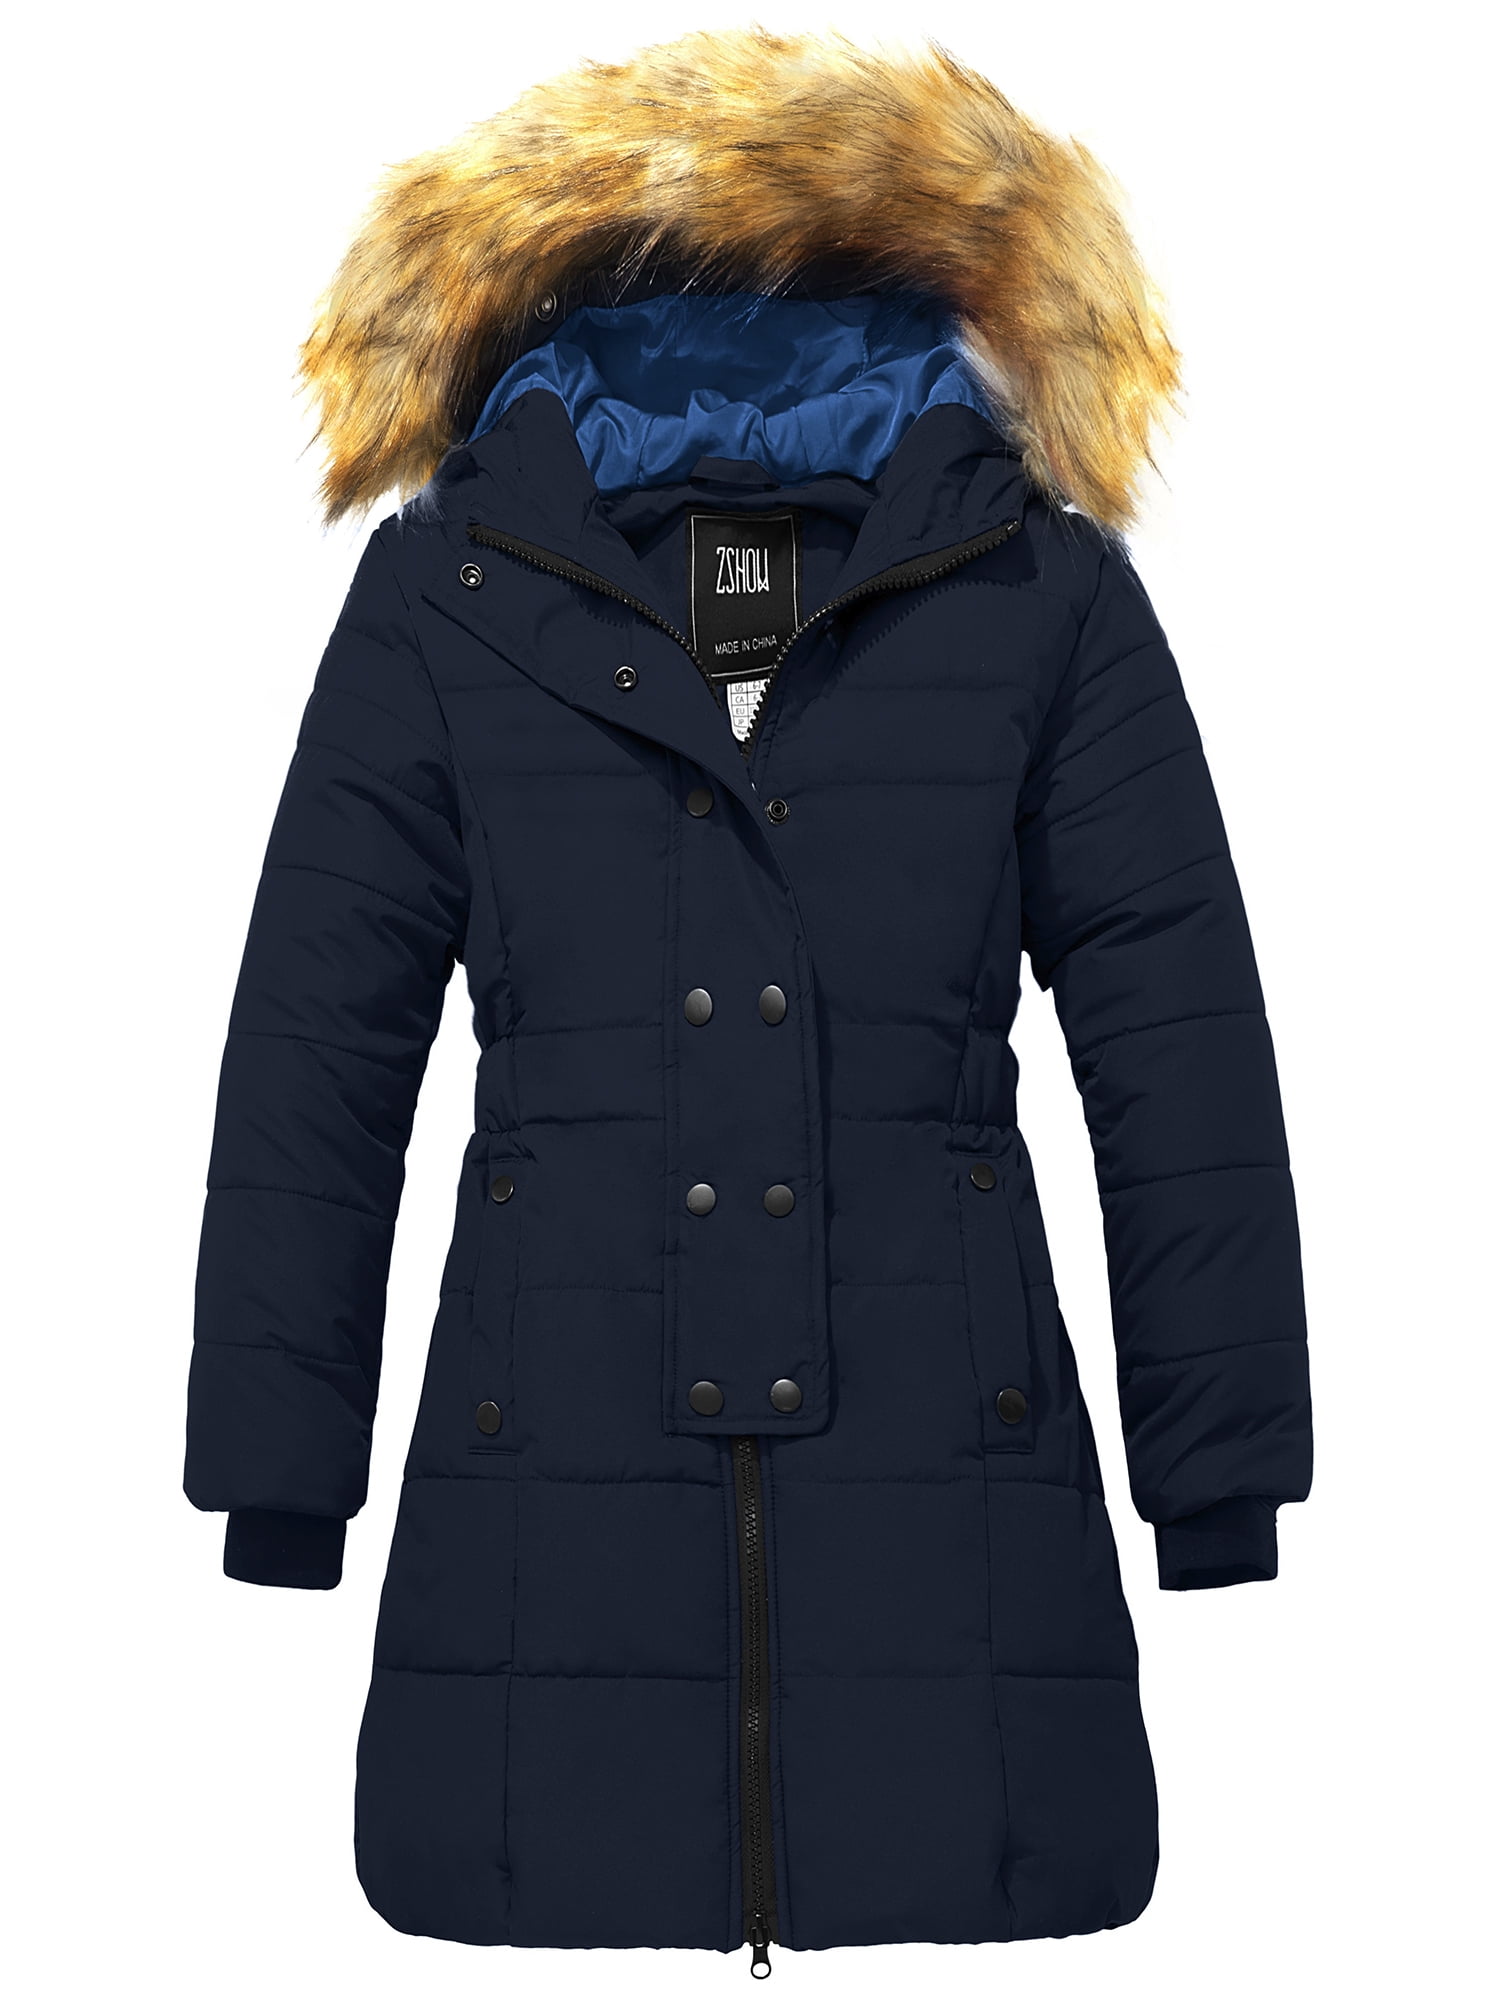 ZSHOW Girls' Winter Jacket Long Puffer Jacket Winter Parka Coat ...